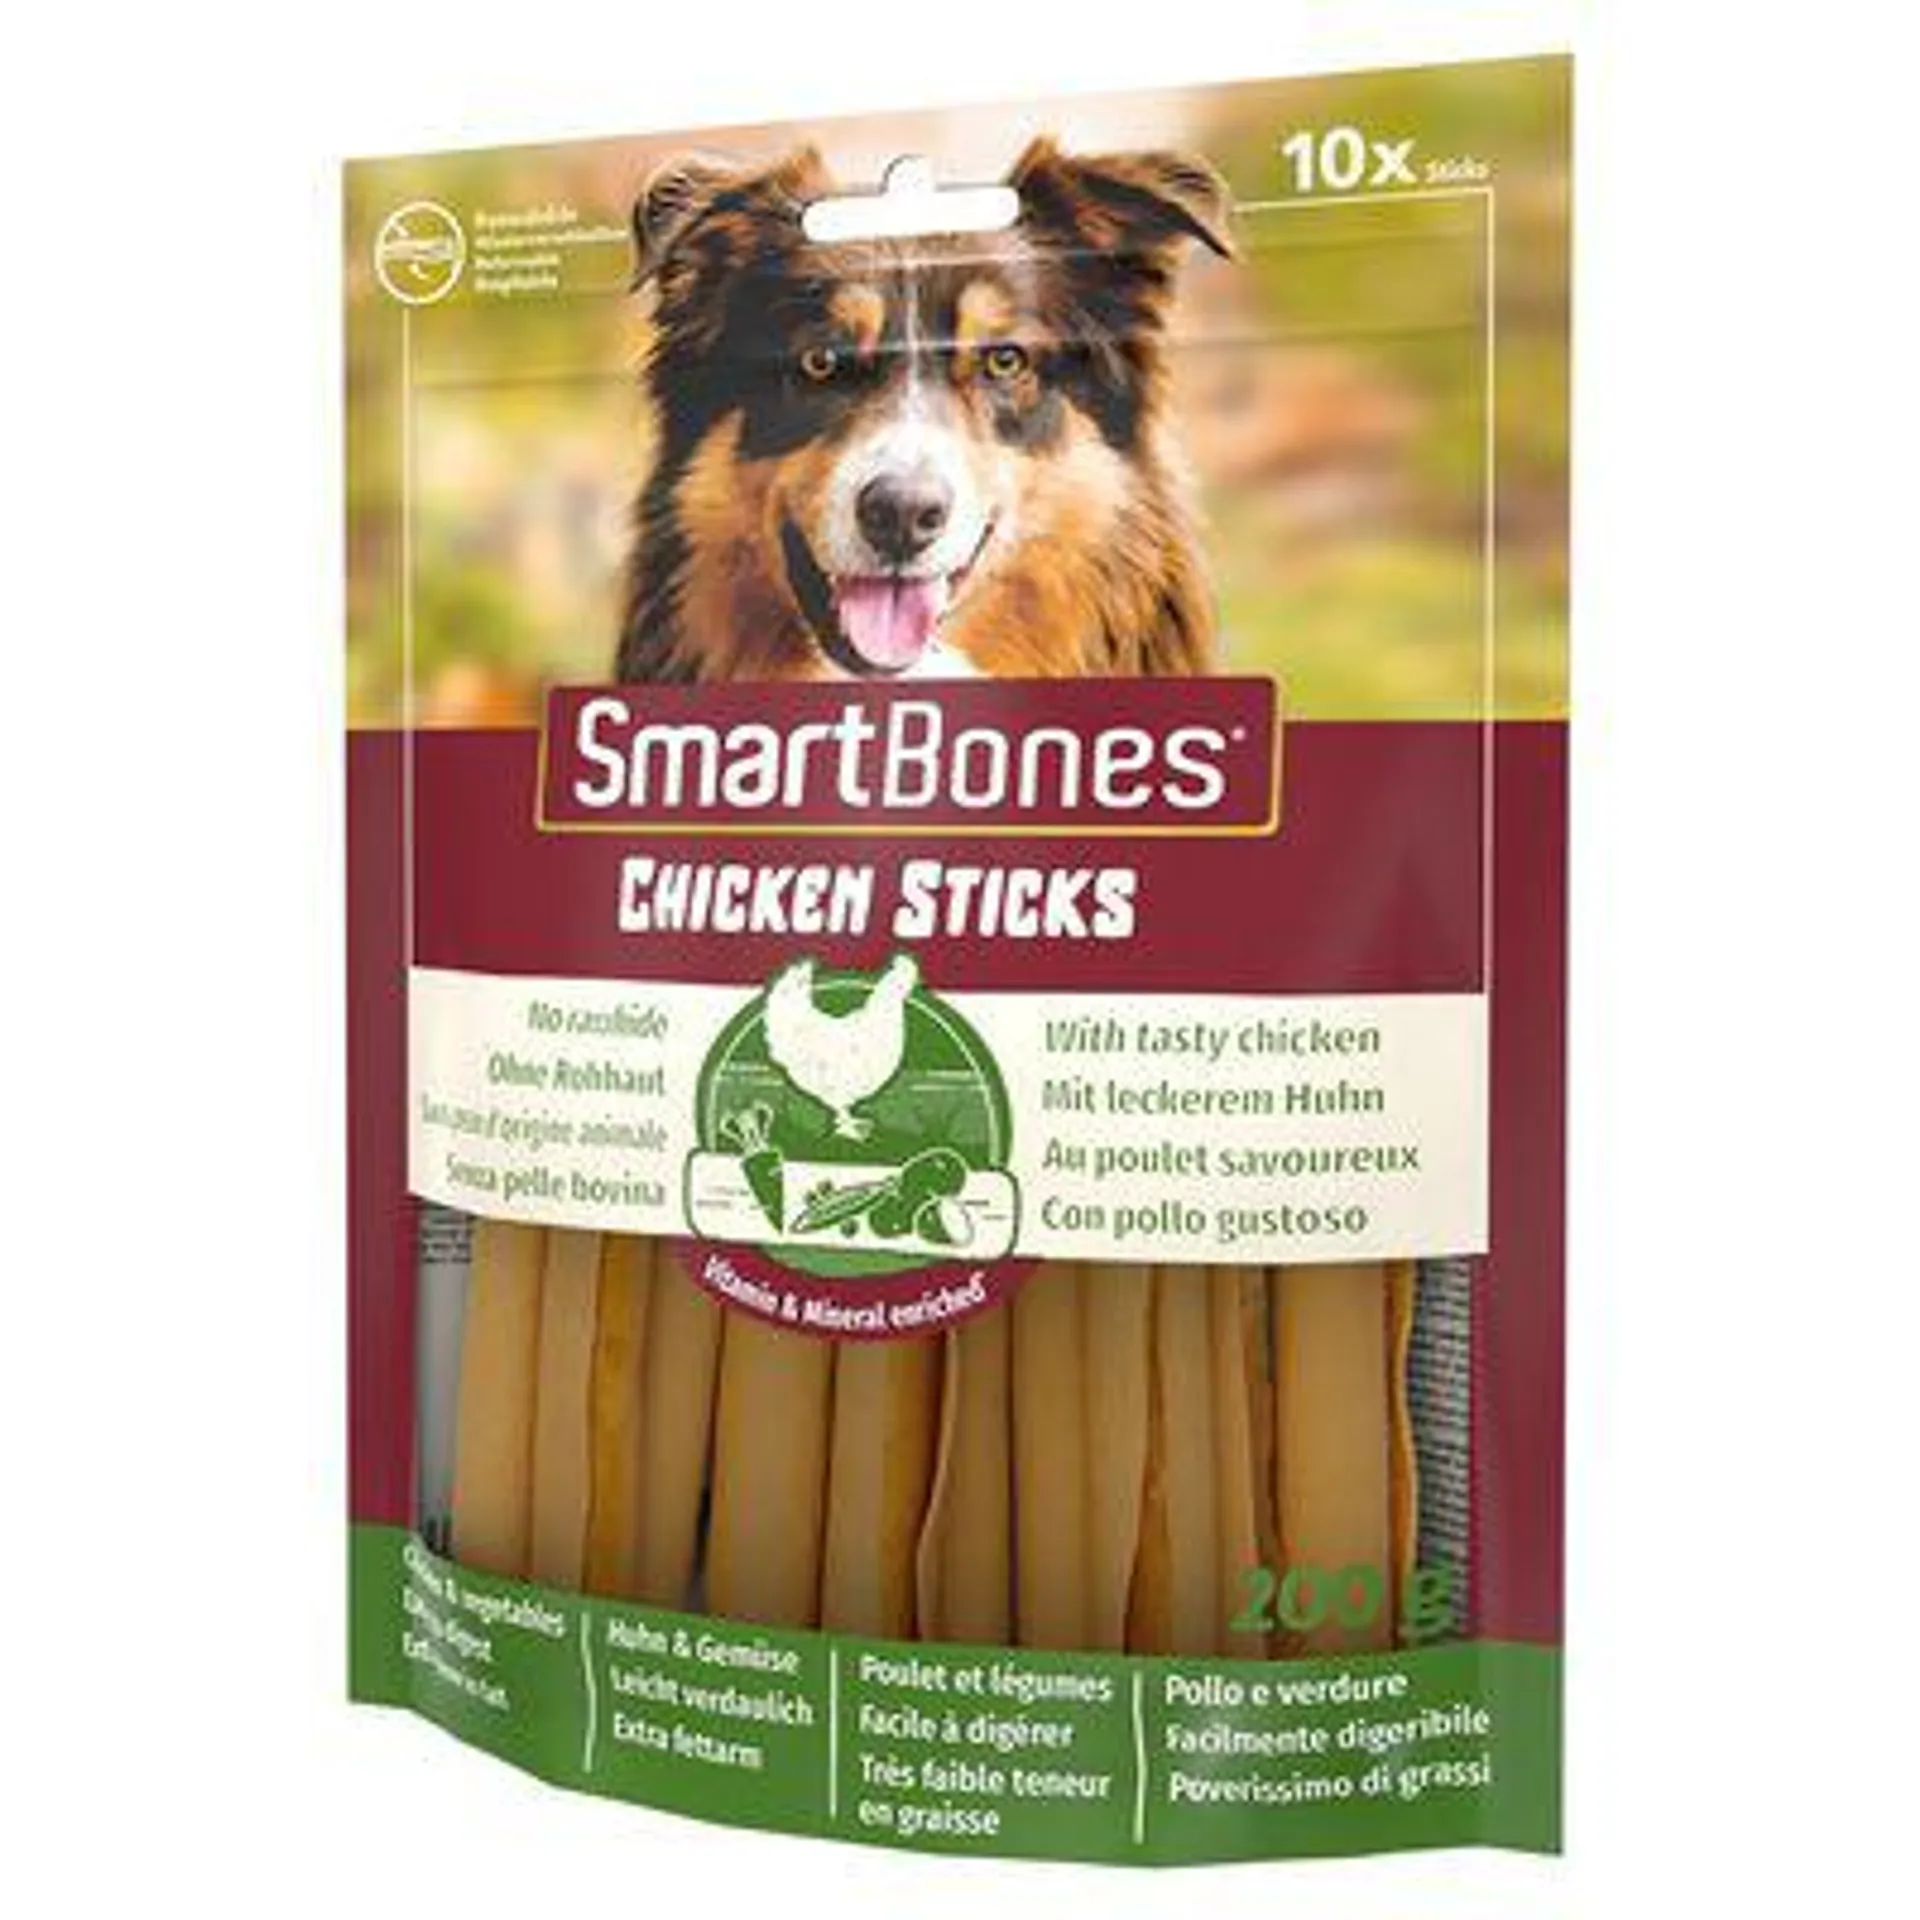 3 x SmartBones Dog Treats - 2 + 1 Free! *